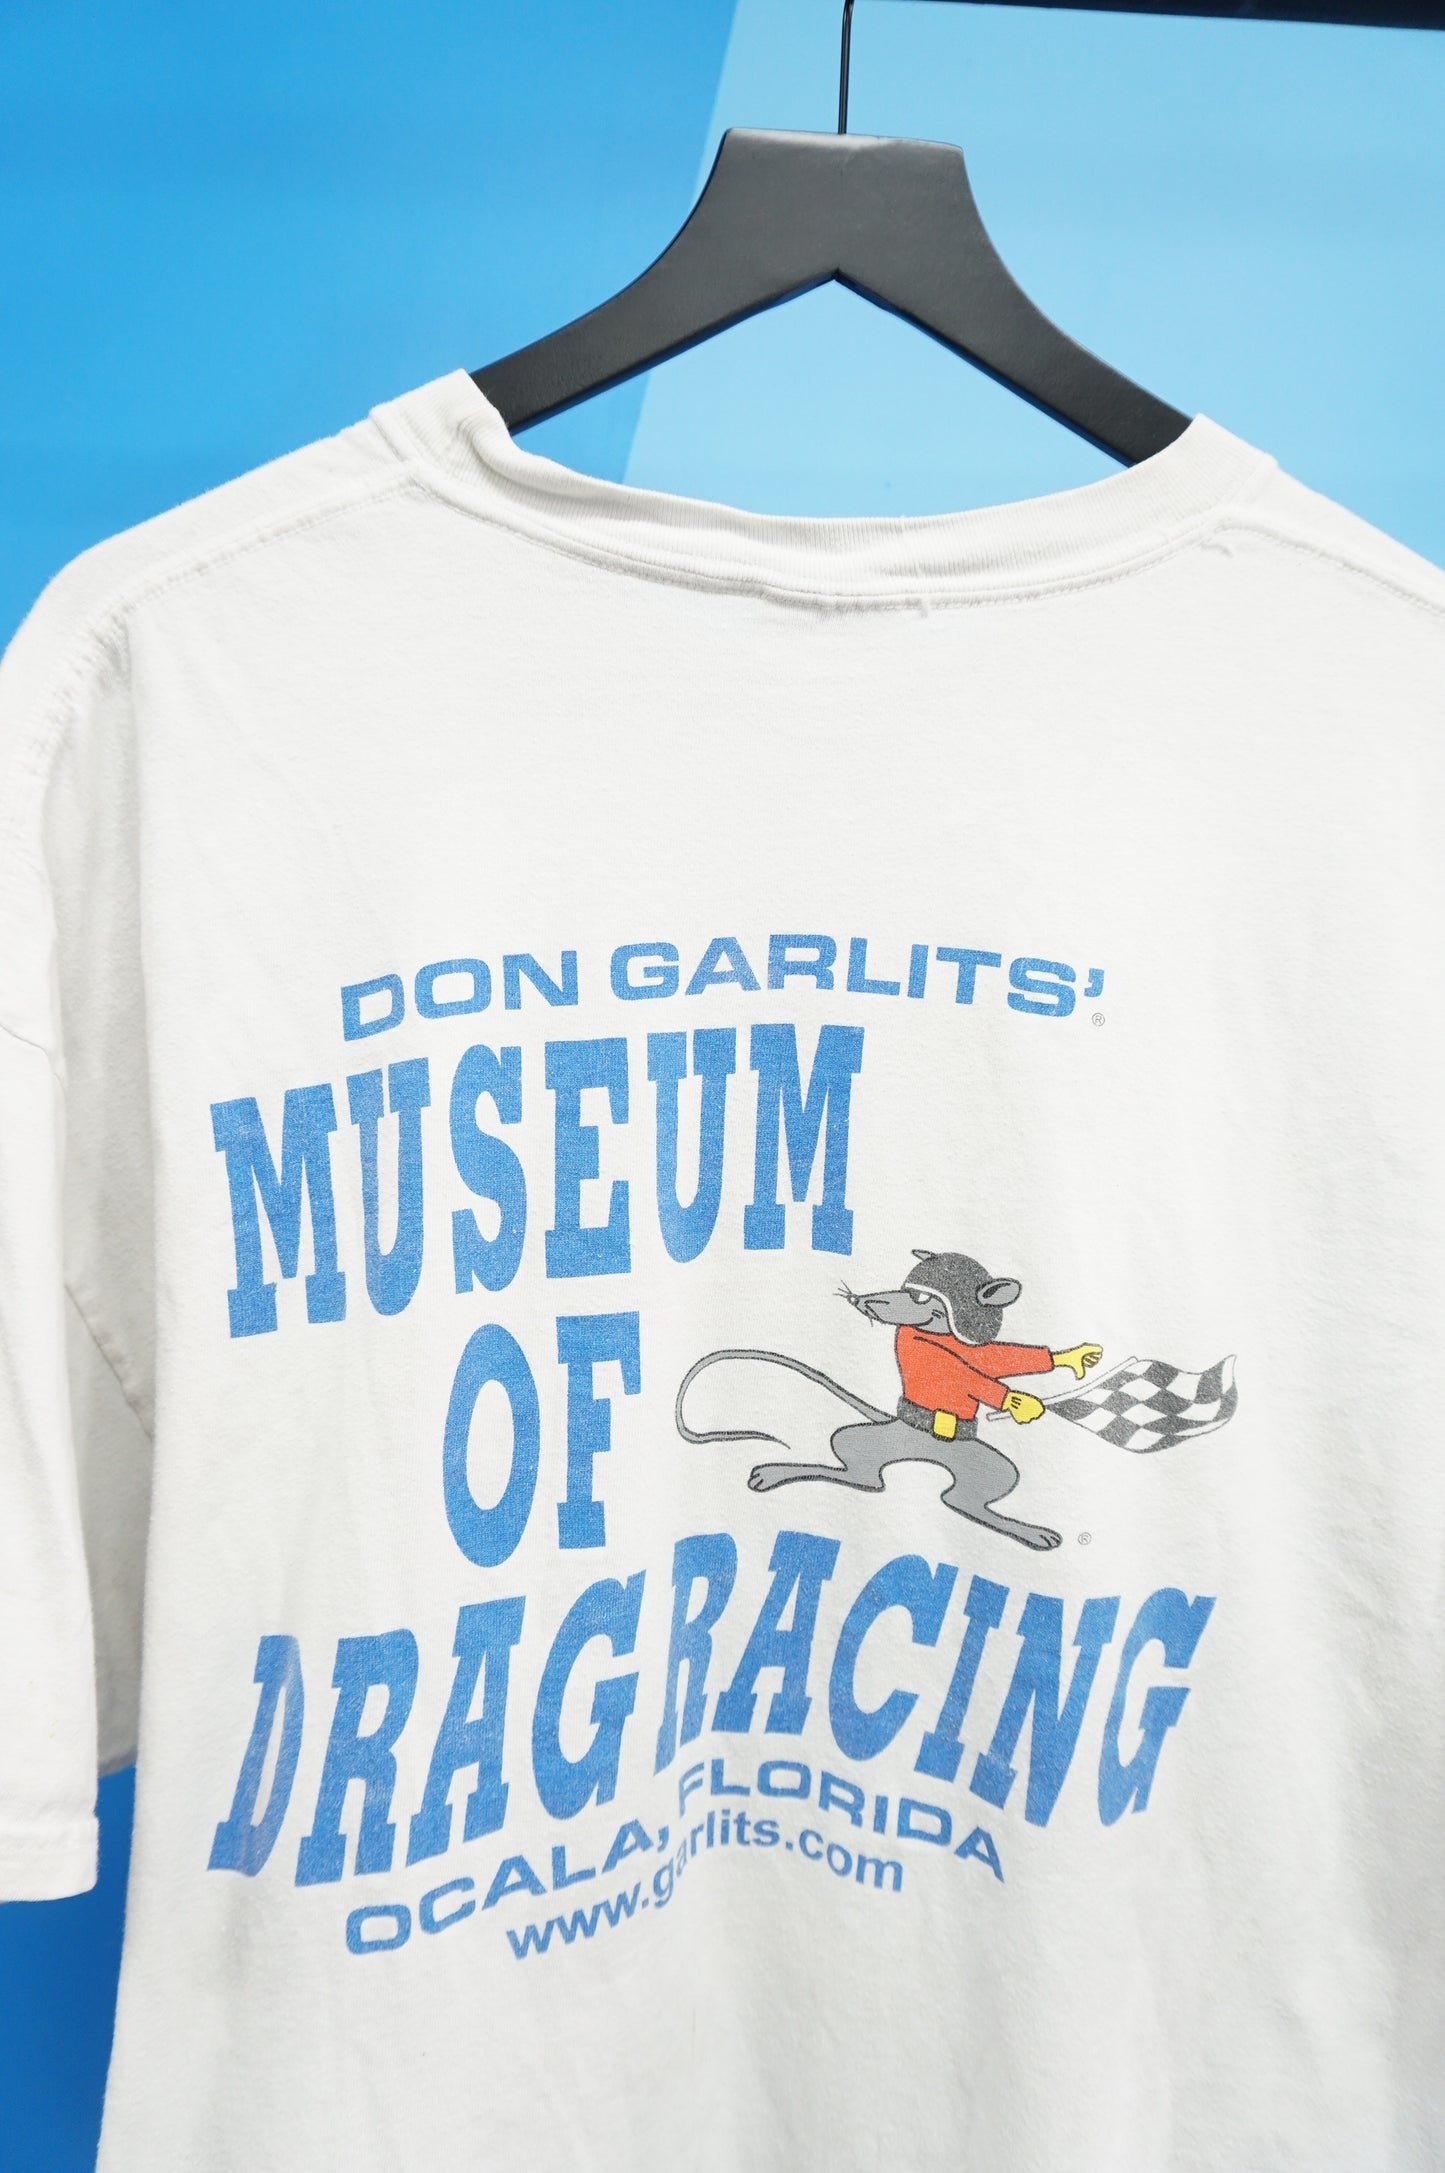 (XXL) 1992 Barb Hamilton Museum of Drag Racing T-Shirt